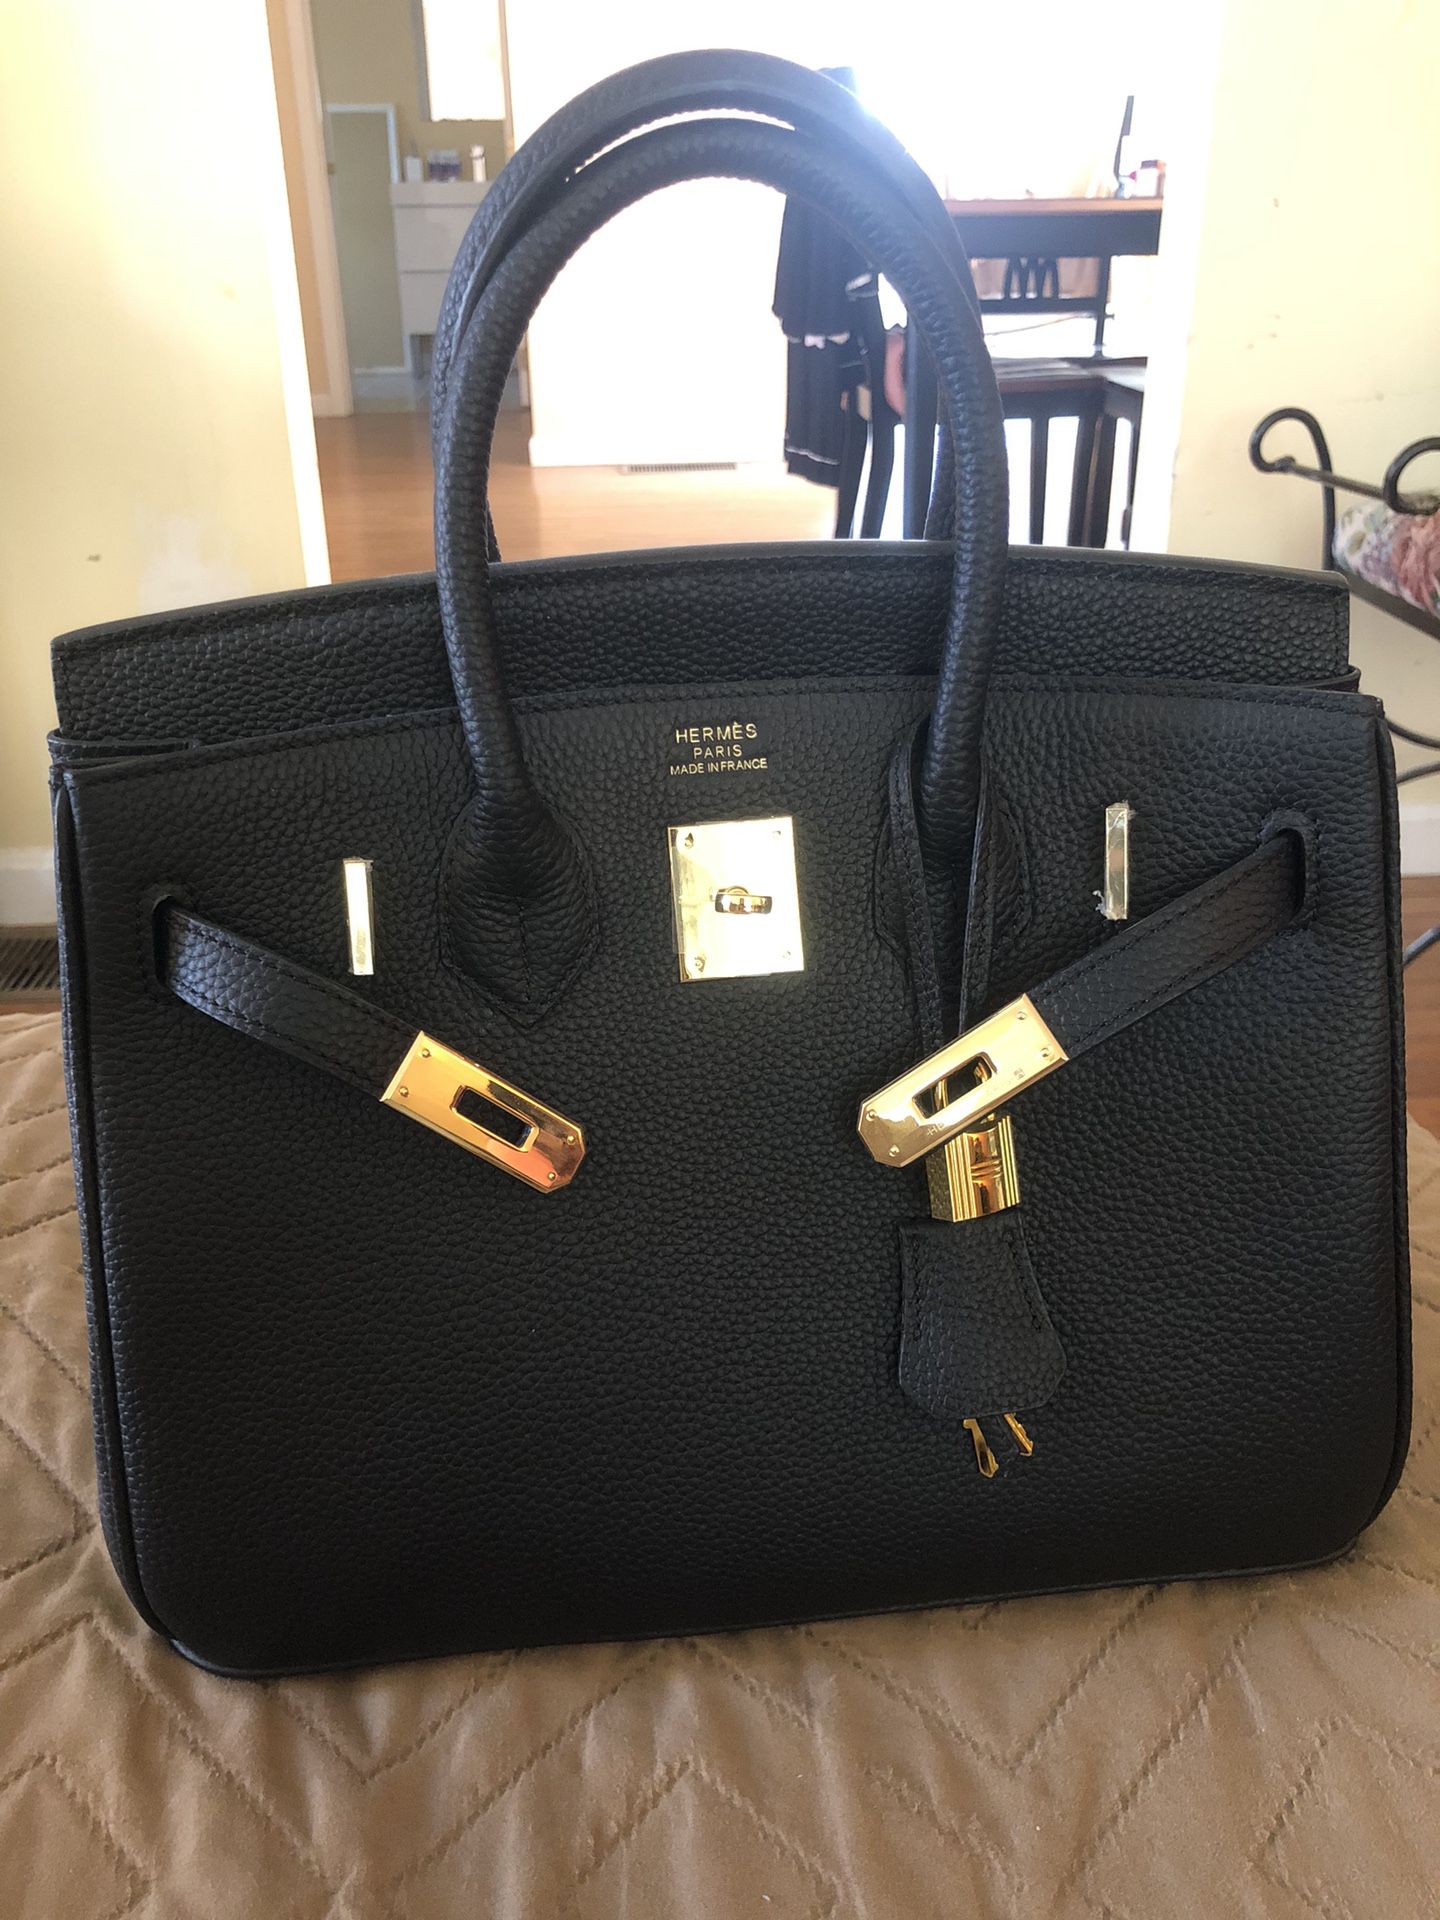 Hermes birkin bag black for Sale in Boston, MA - OfferUp